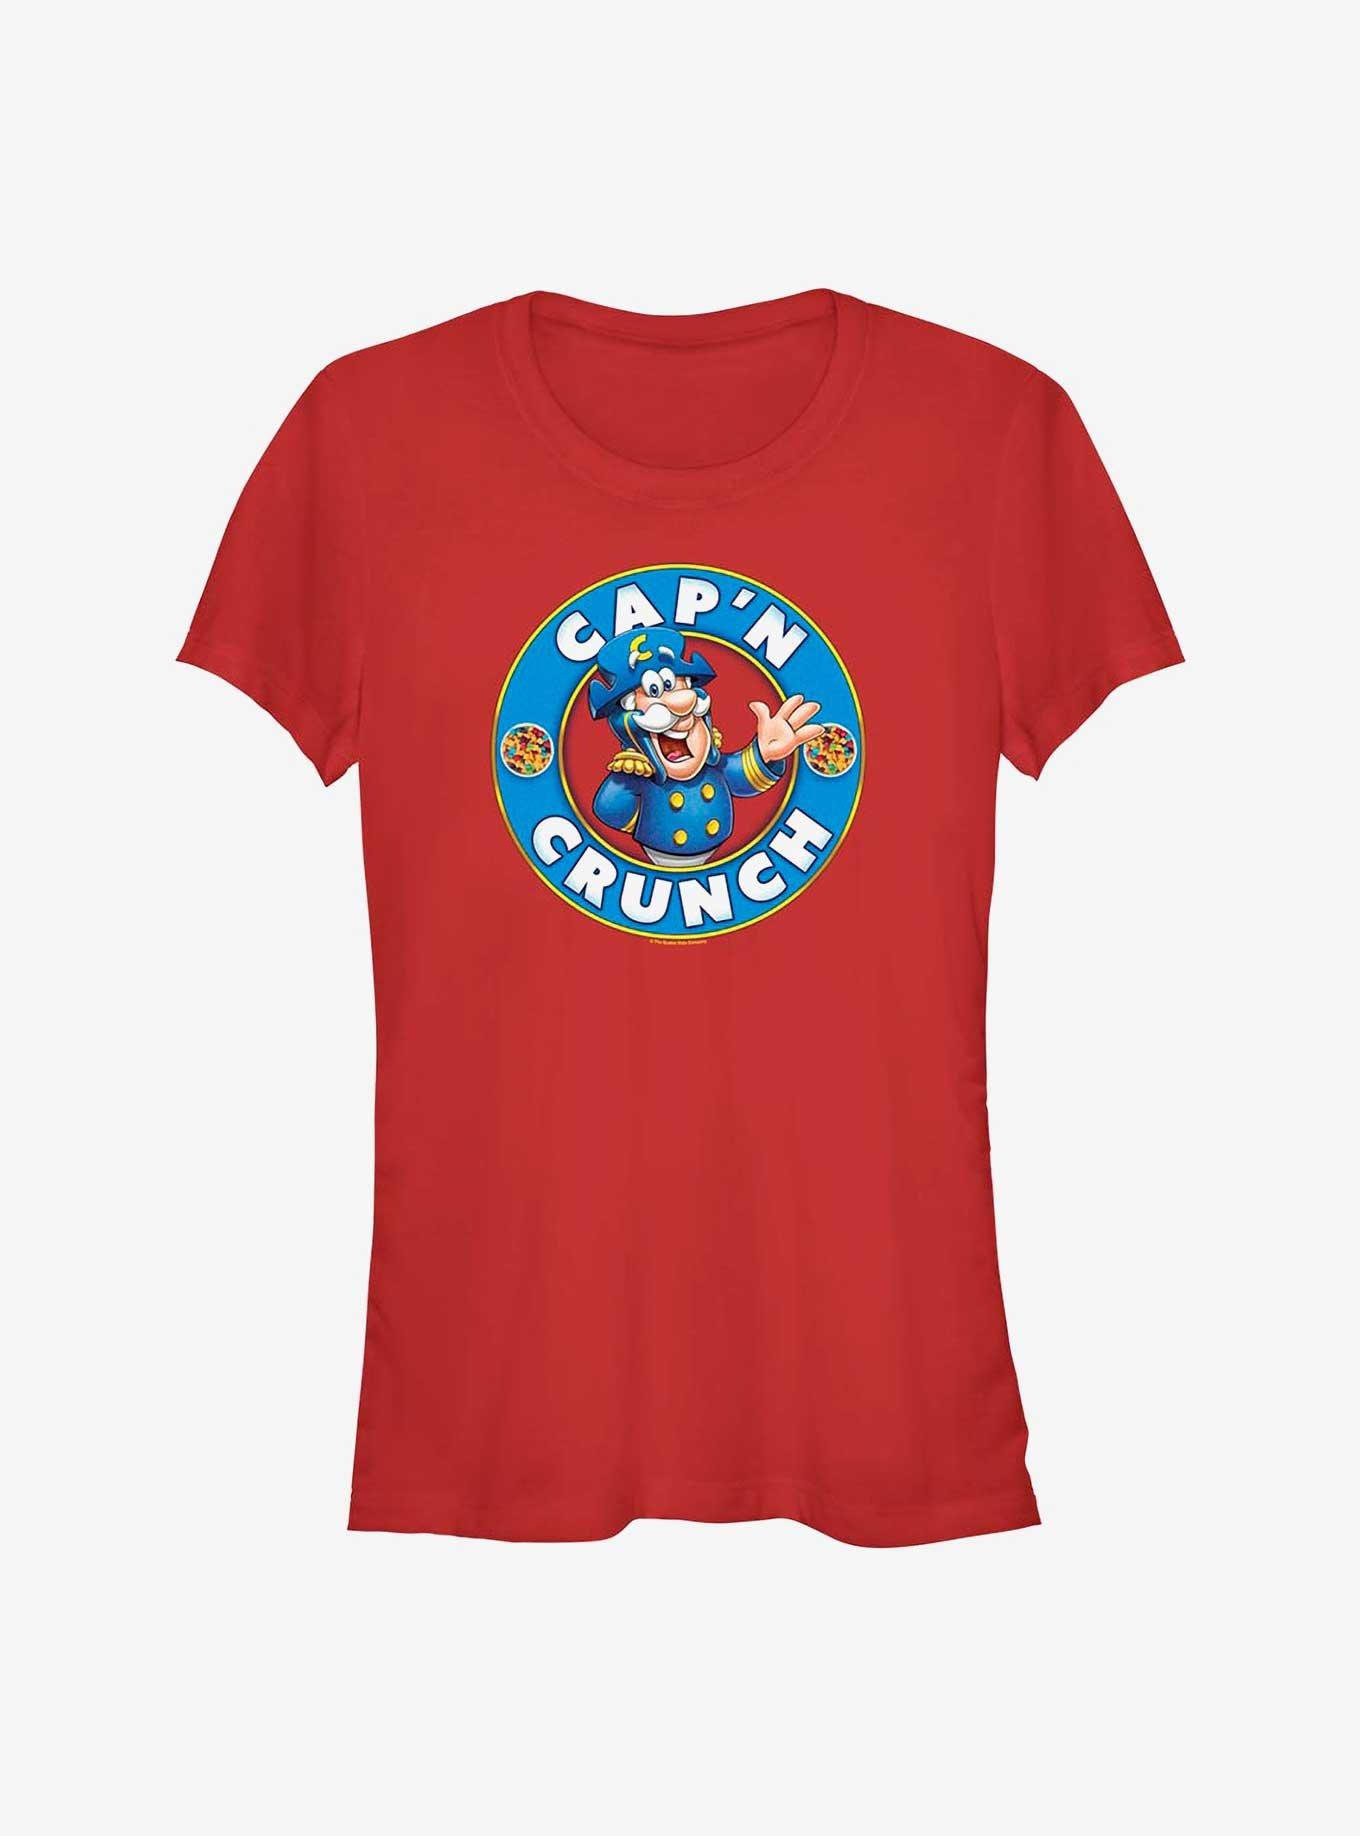 Capn Crunch Stamp Girls T-Shirt, RED, hi-res